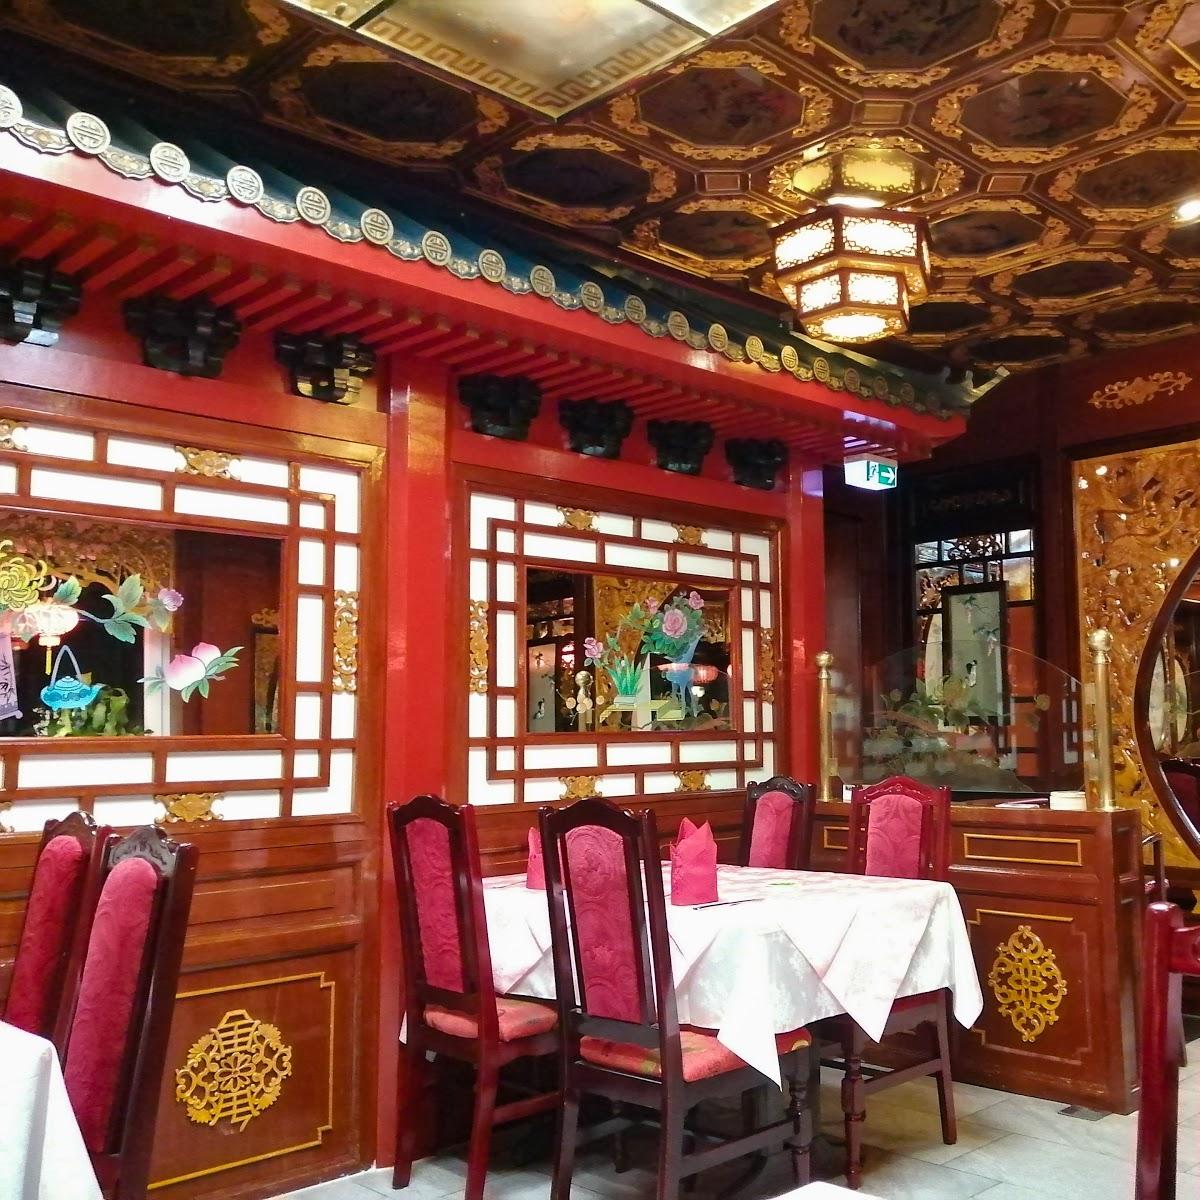 Restaurant "Hong Kong" in Weil am Rhein